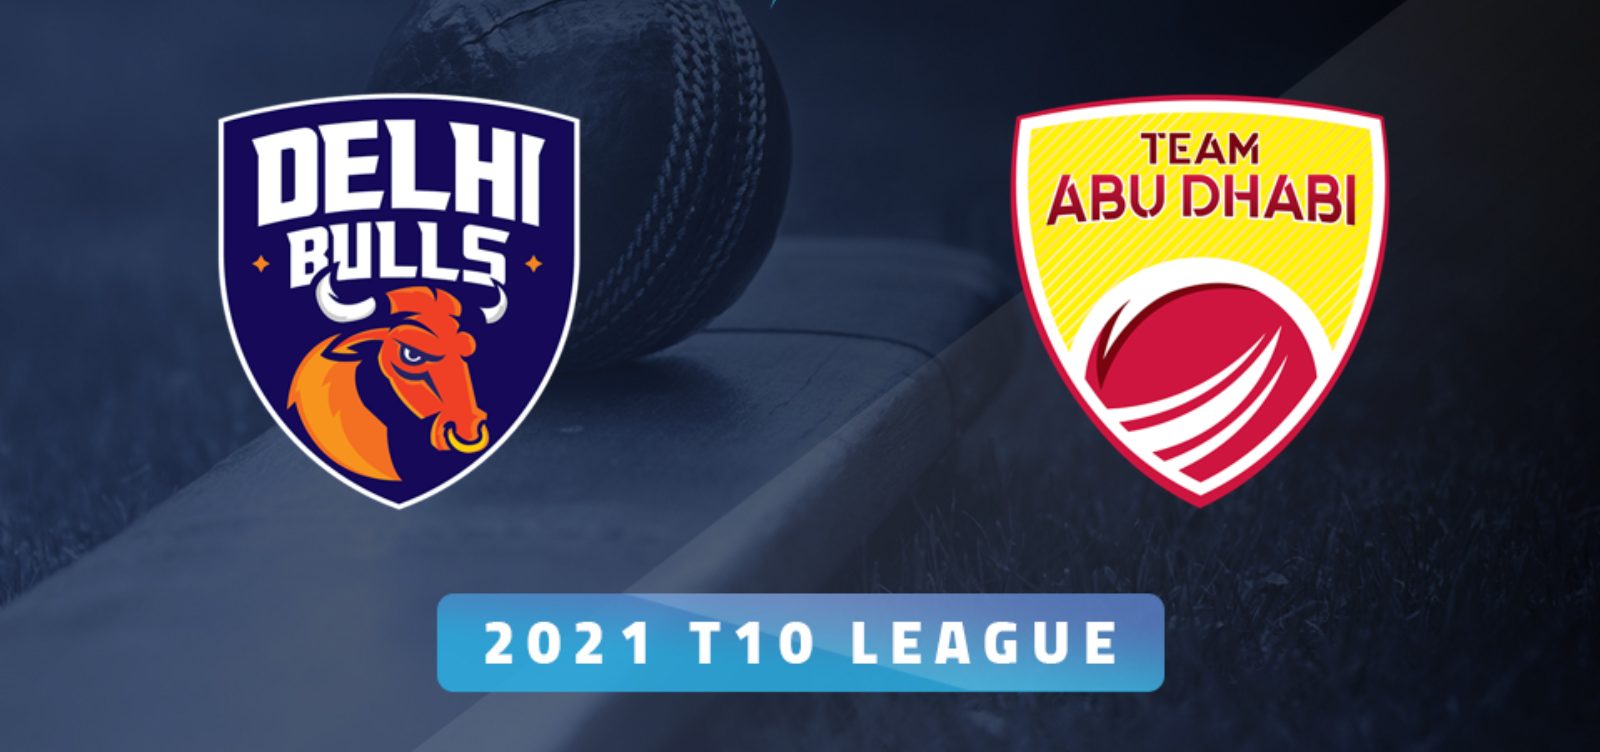 Abu Dhabi T10 LIVE: Preview, Squad News, Head to Head stats and Dream11 Prediction for Delhi Bulls vs Team Abu Dhabi - Match 12